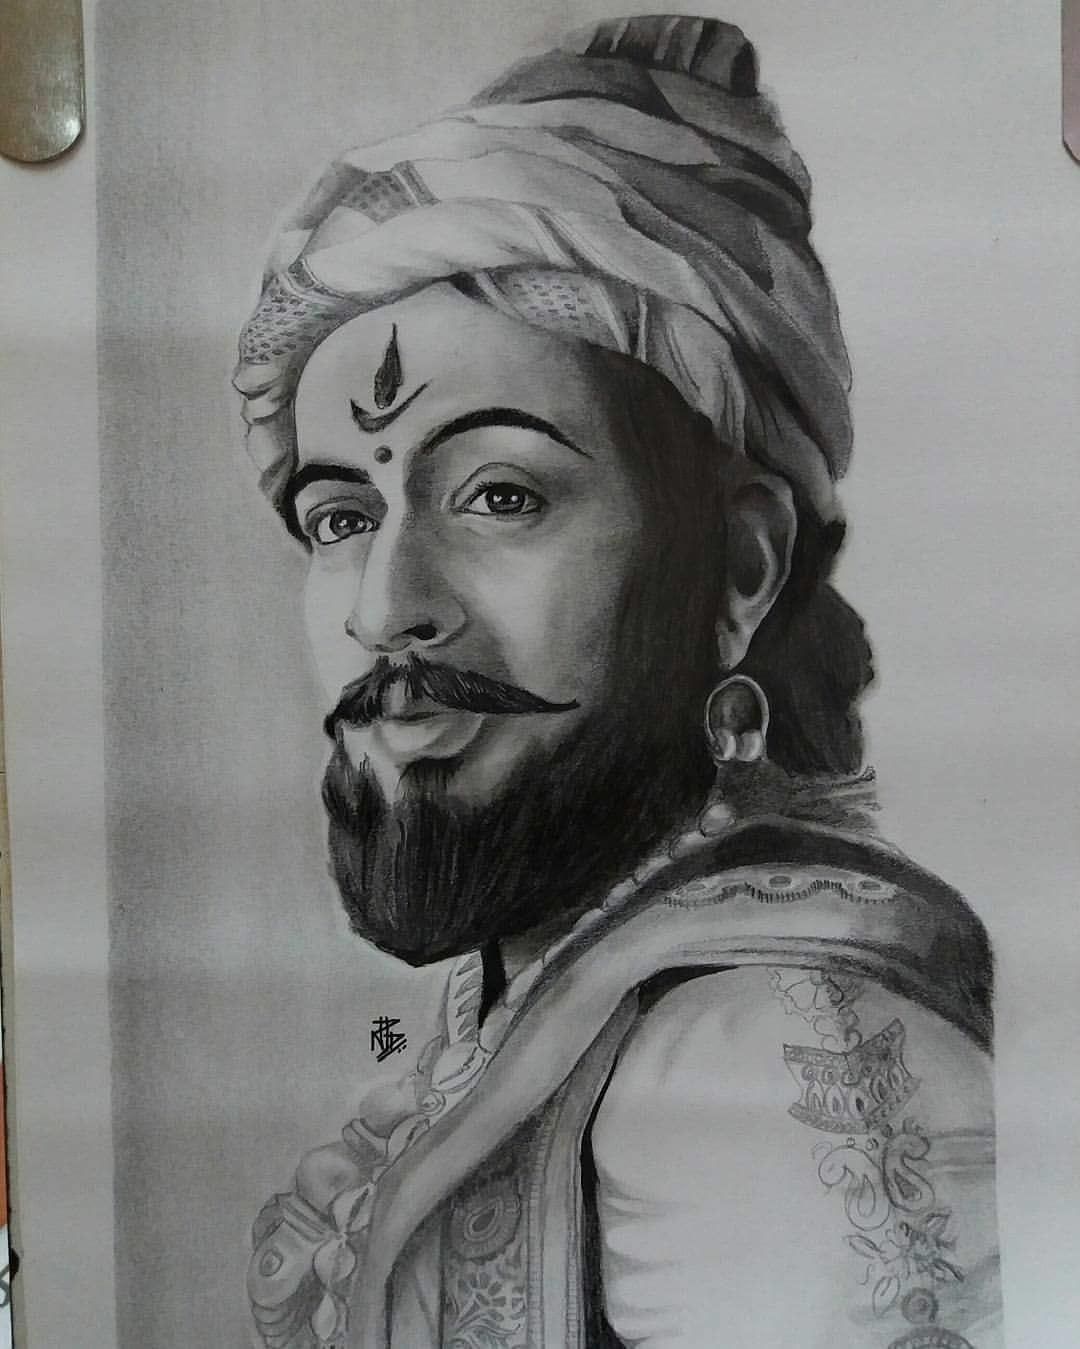 Shivaji Maharaj Line Art Drawing || छत्रपति शिवाजी महाराज जी का चित्र बनाना  सीखें || @WowArtAcademy - YouTube